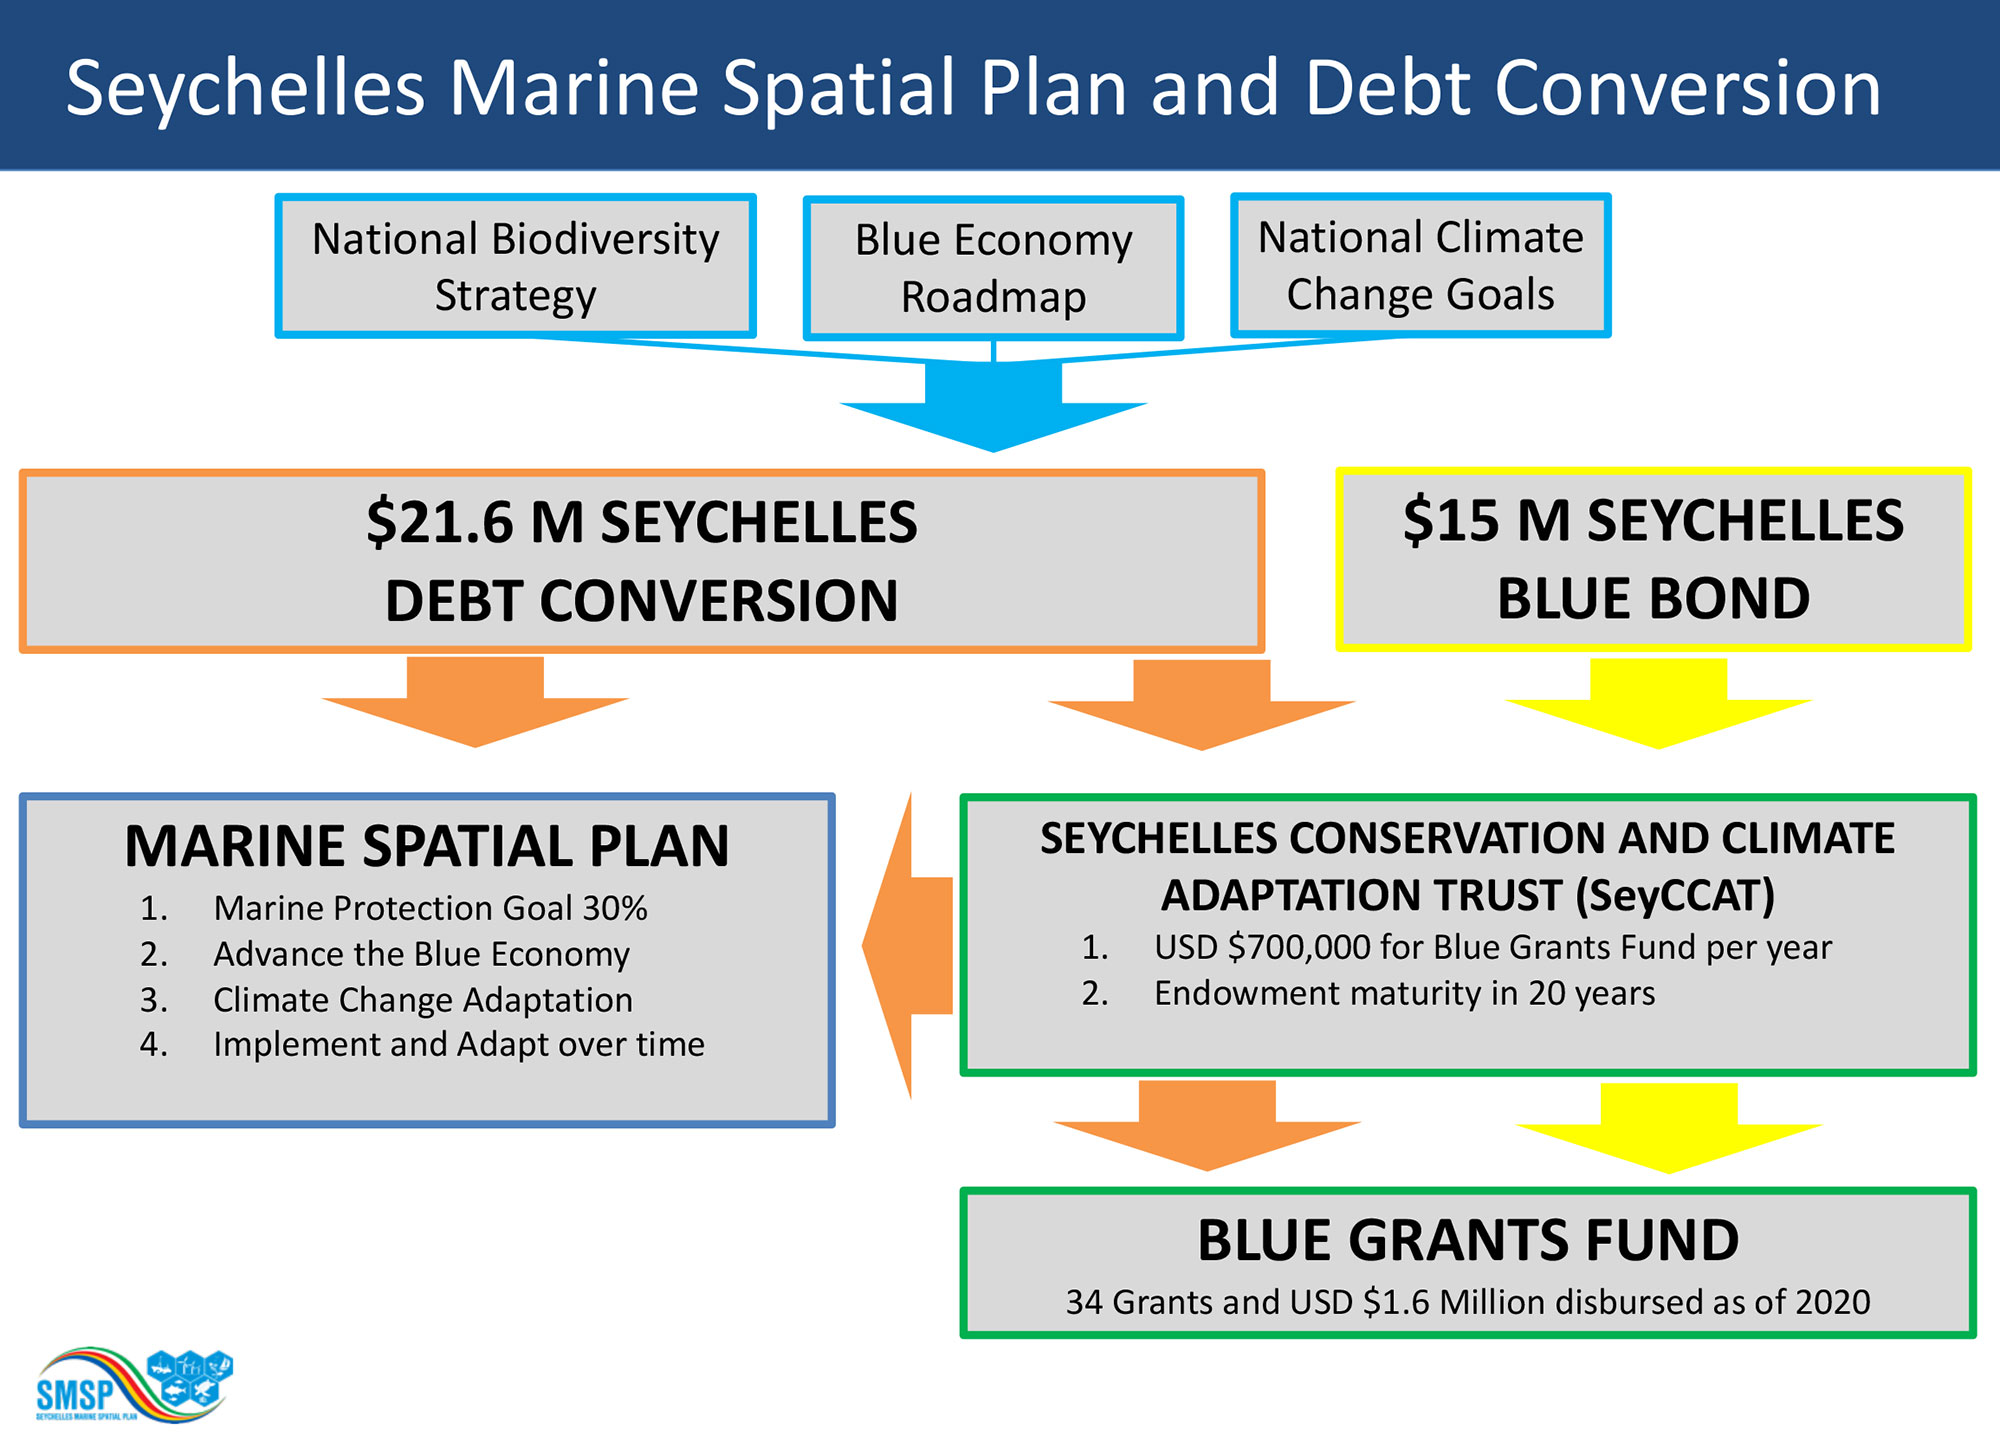 Seychelles Marine Spatial Plan and Debt Conversion